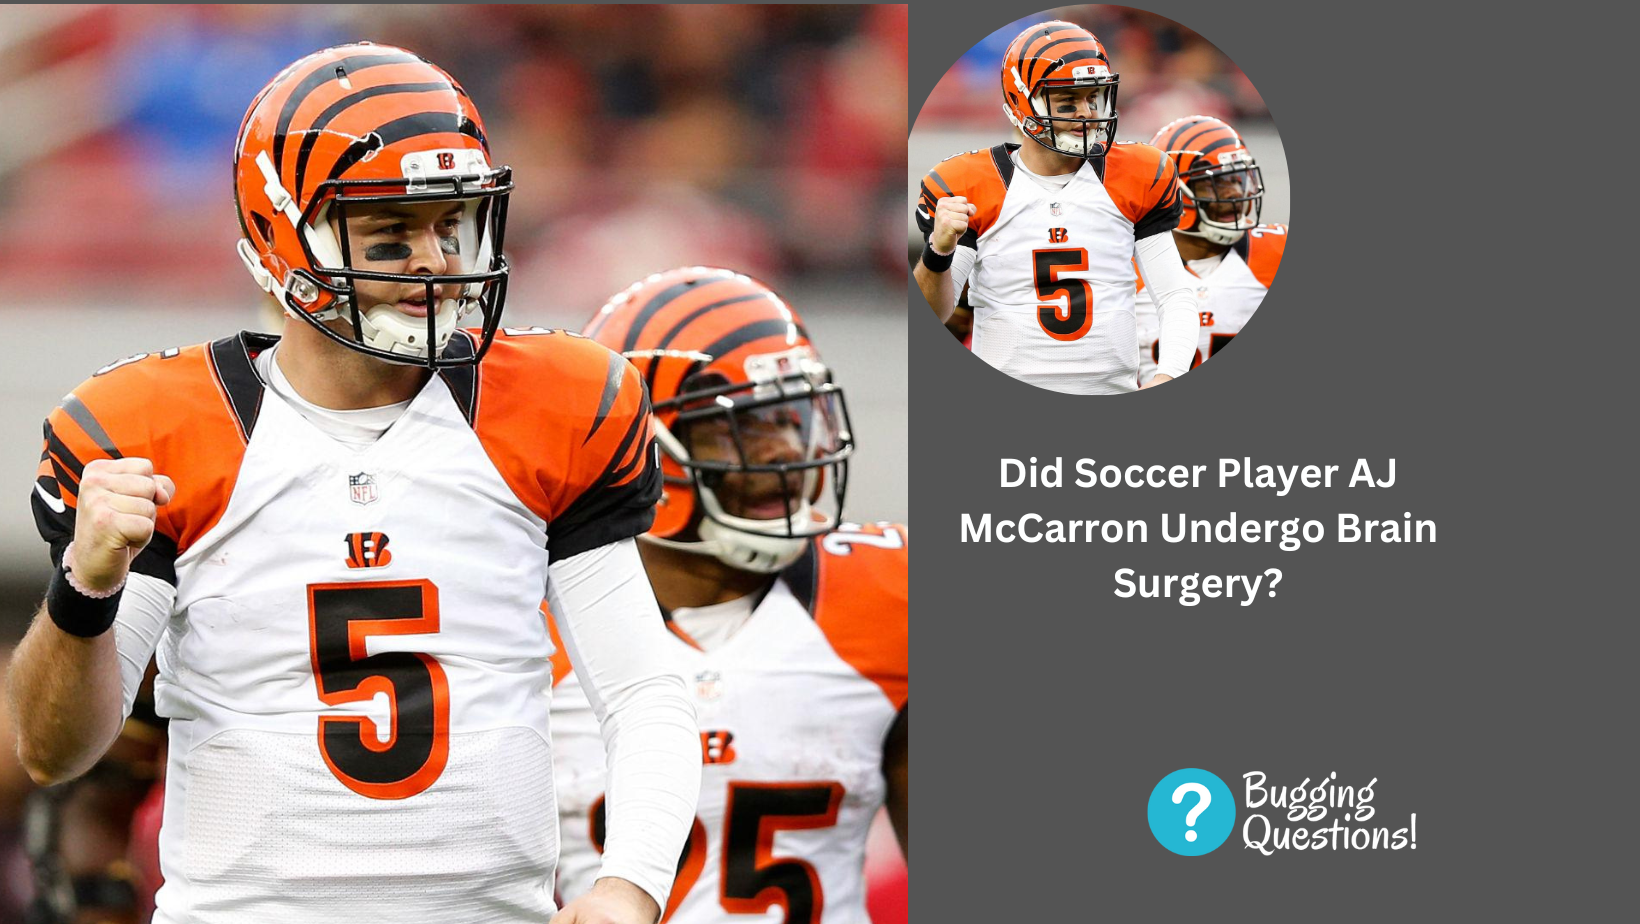 Did Soccer Player AJ McCarron Undergo Brain Surgery?